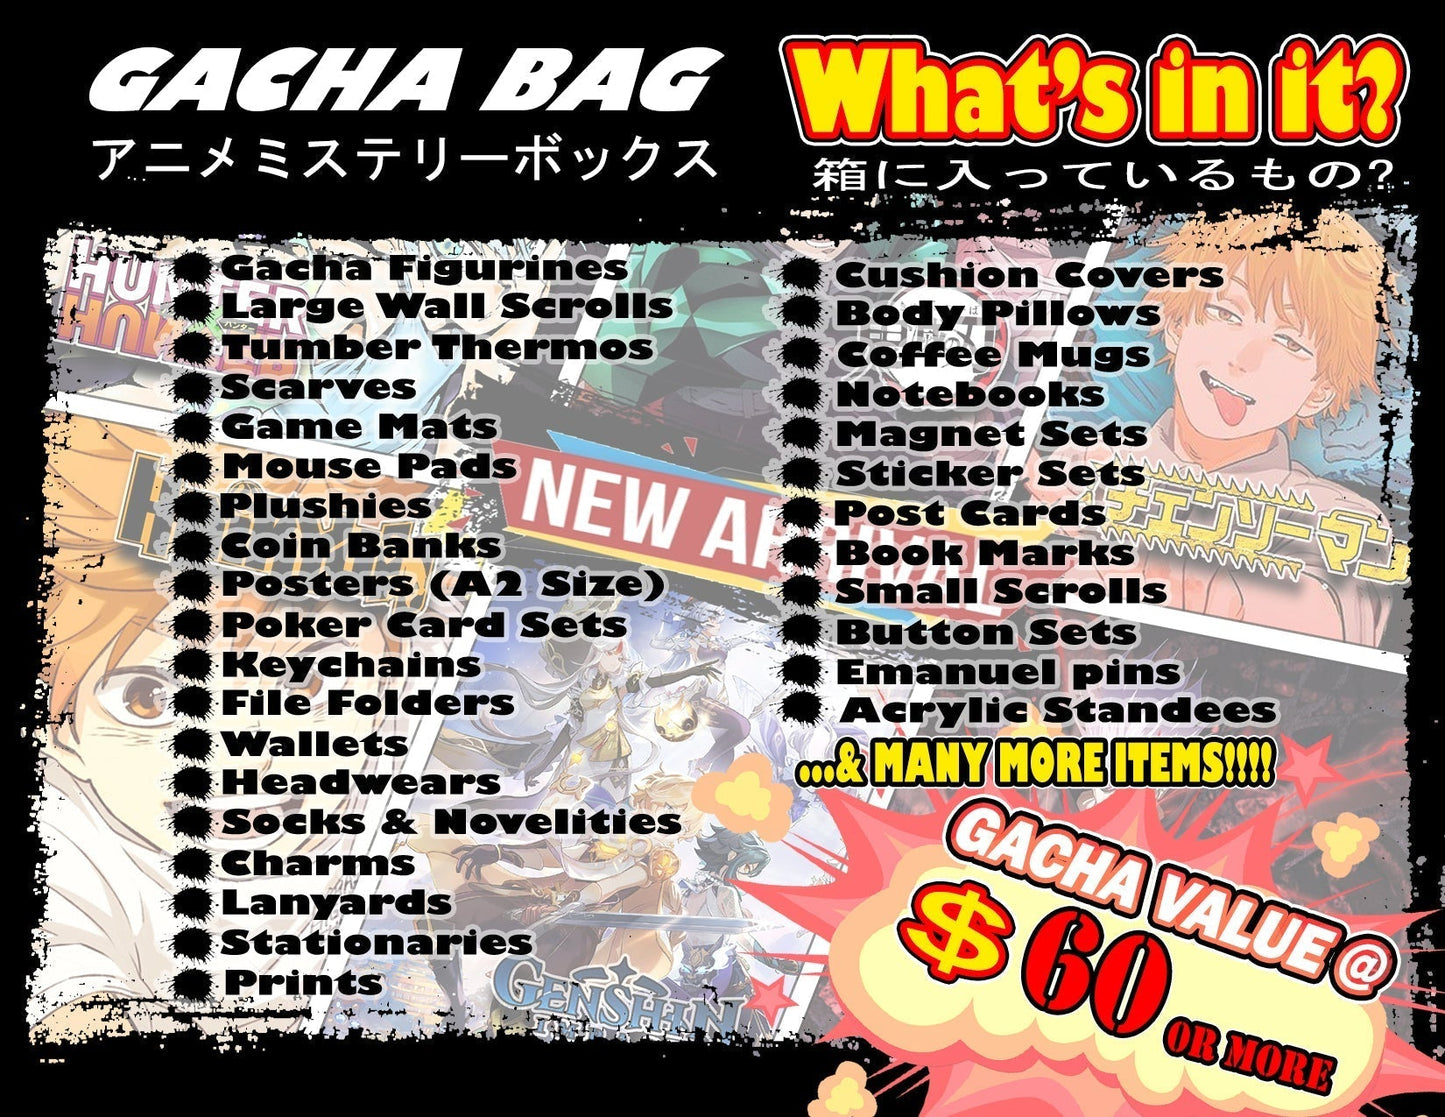 (BLH-GACHA) Bleach Anime Mystery Box